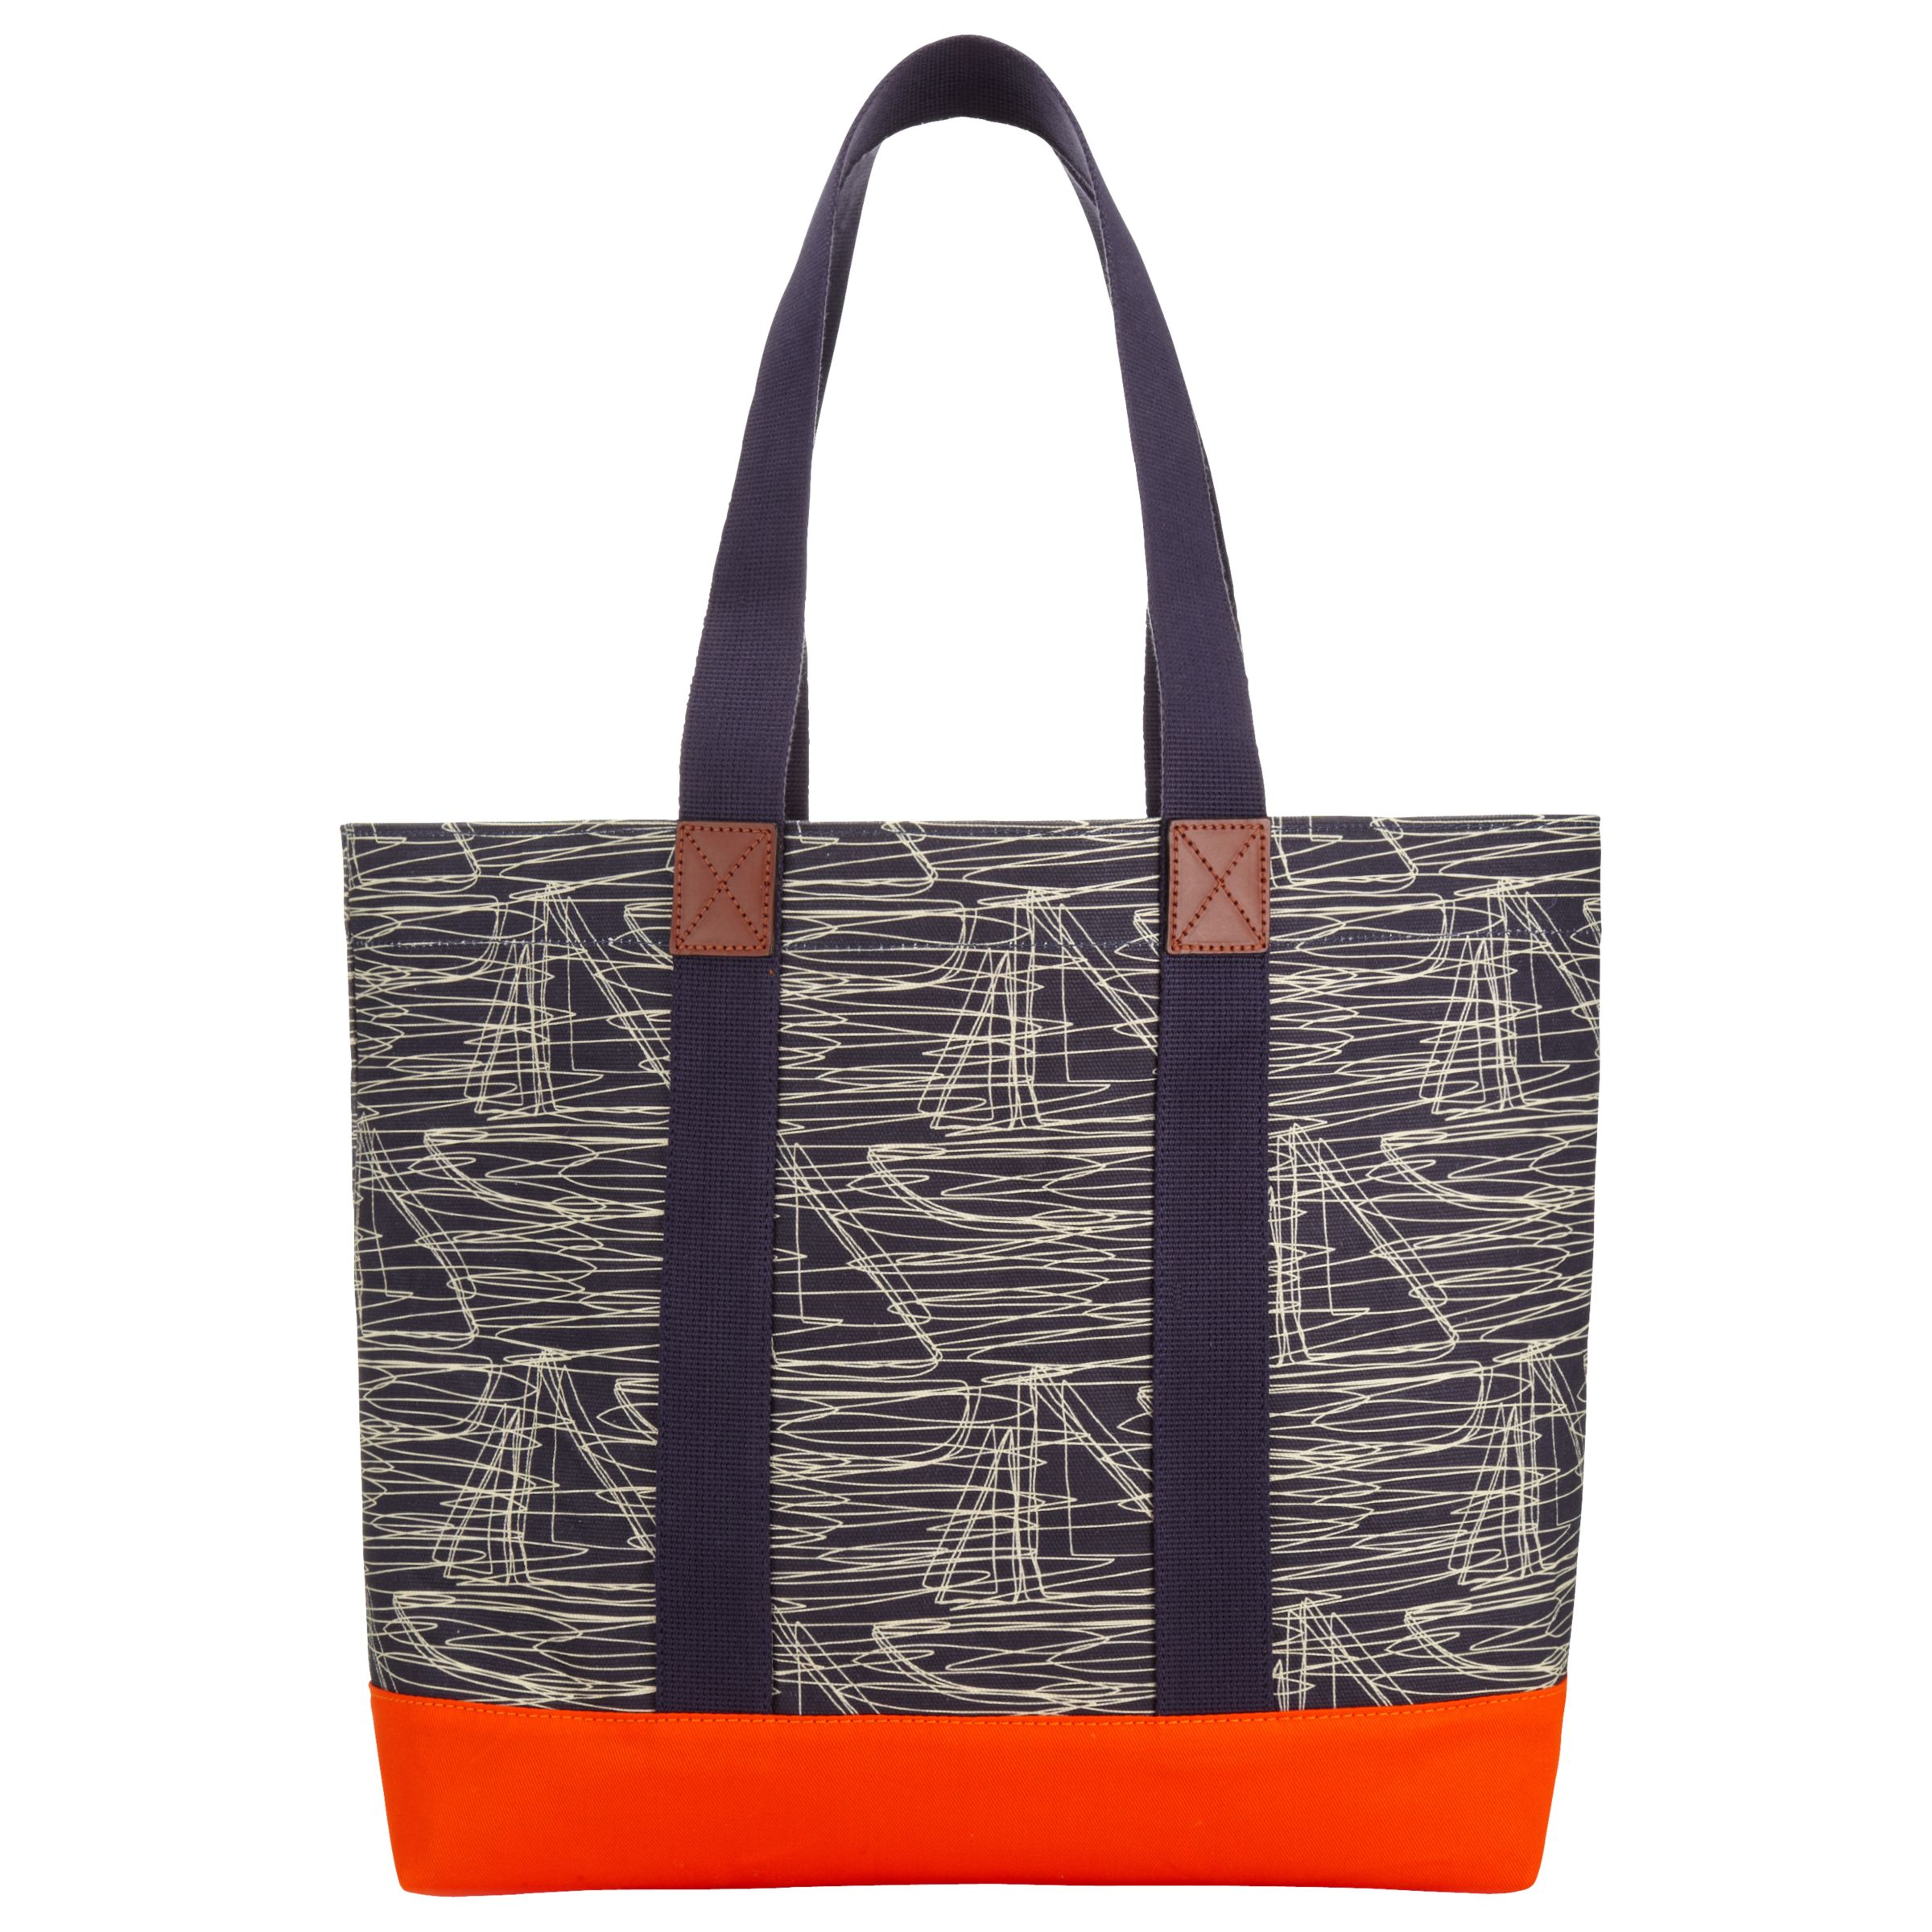 Buy Orla Kiely Printed Tote Bag Online at johnlewis.com